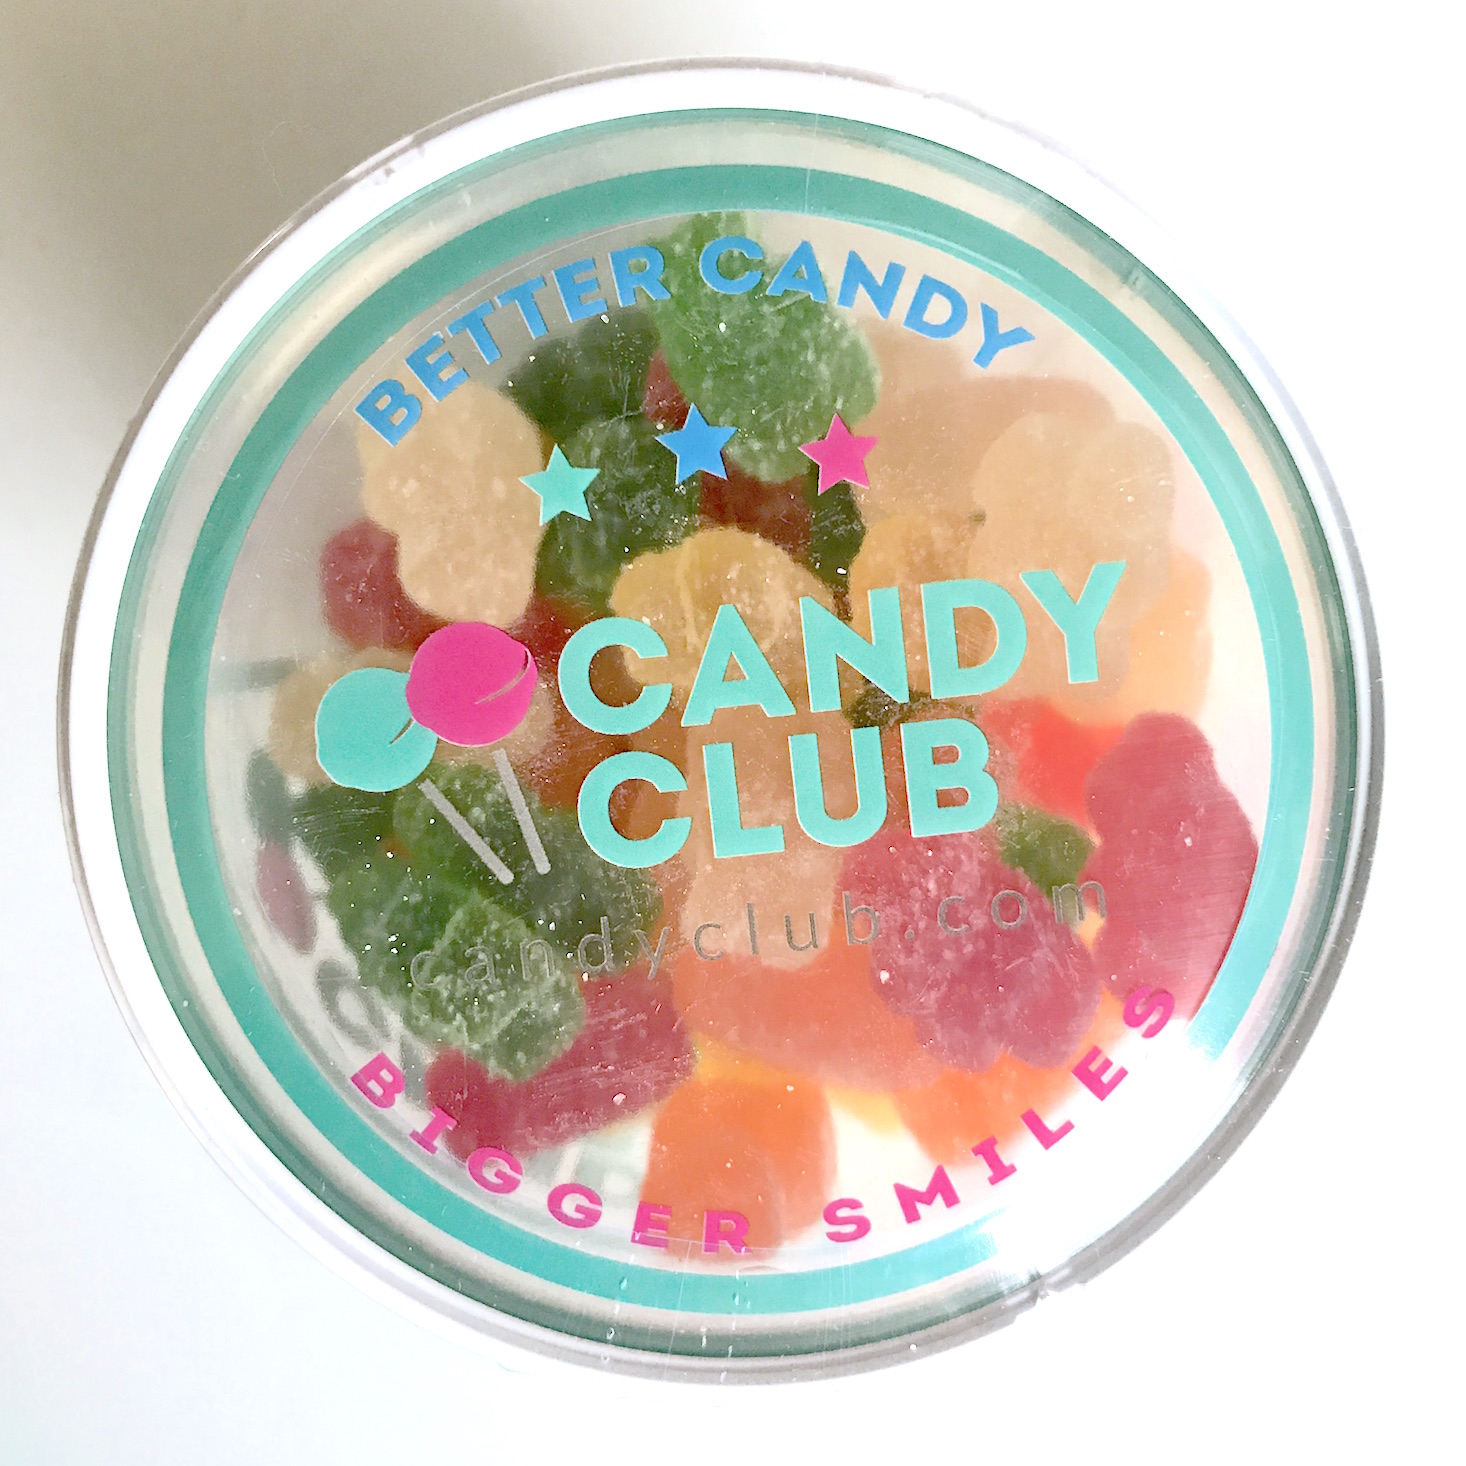 Candy Club December 2017 - gummy bears